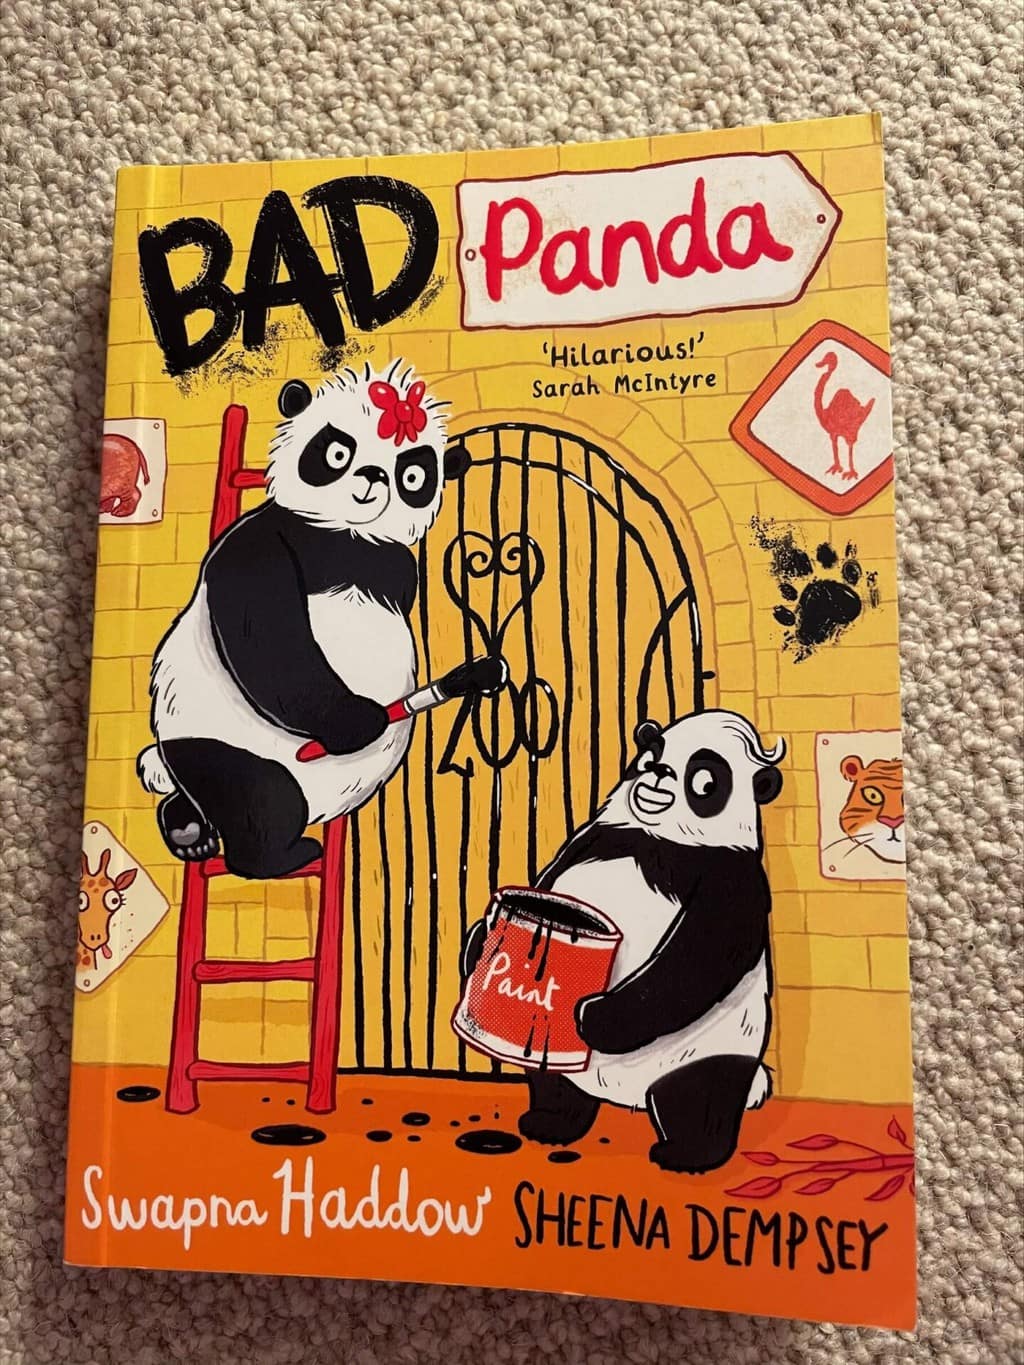 Bad Panda – Swapna Haddow (Author), Sheena Dempsey (Illustrator), Faber & Faber (publisher)